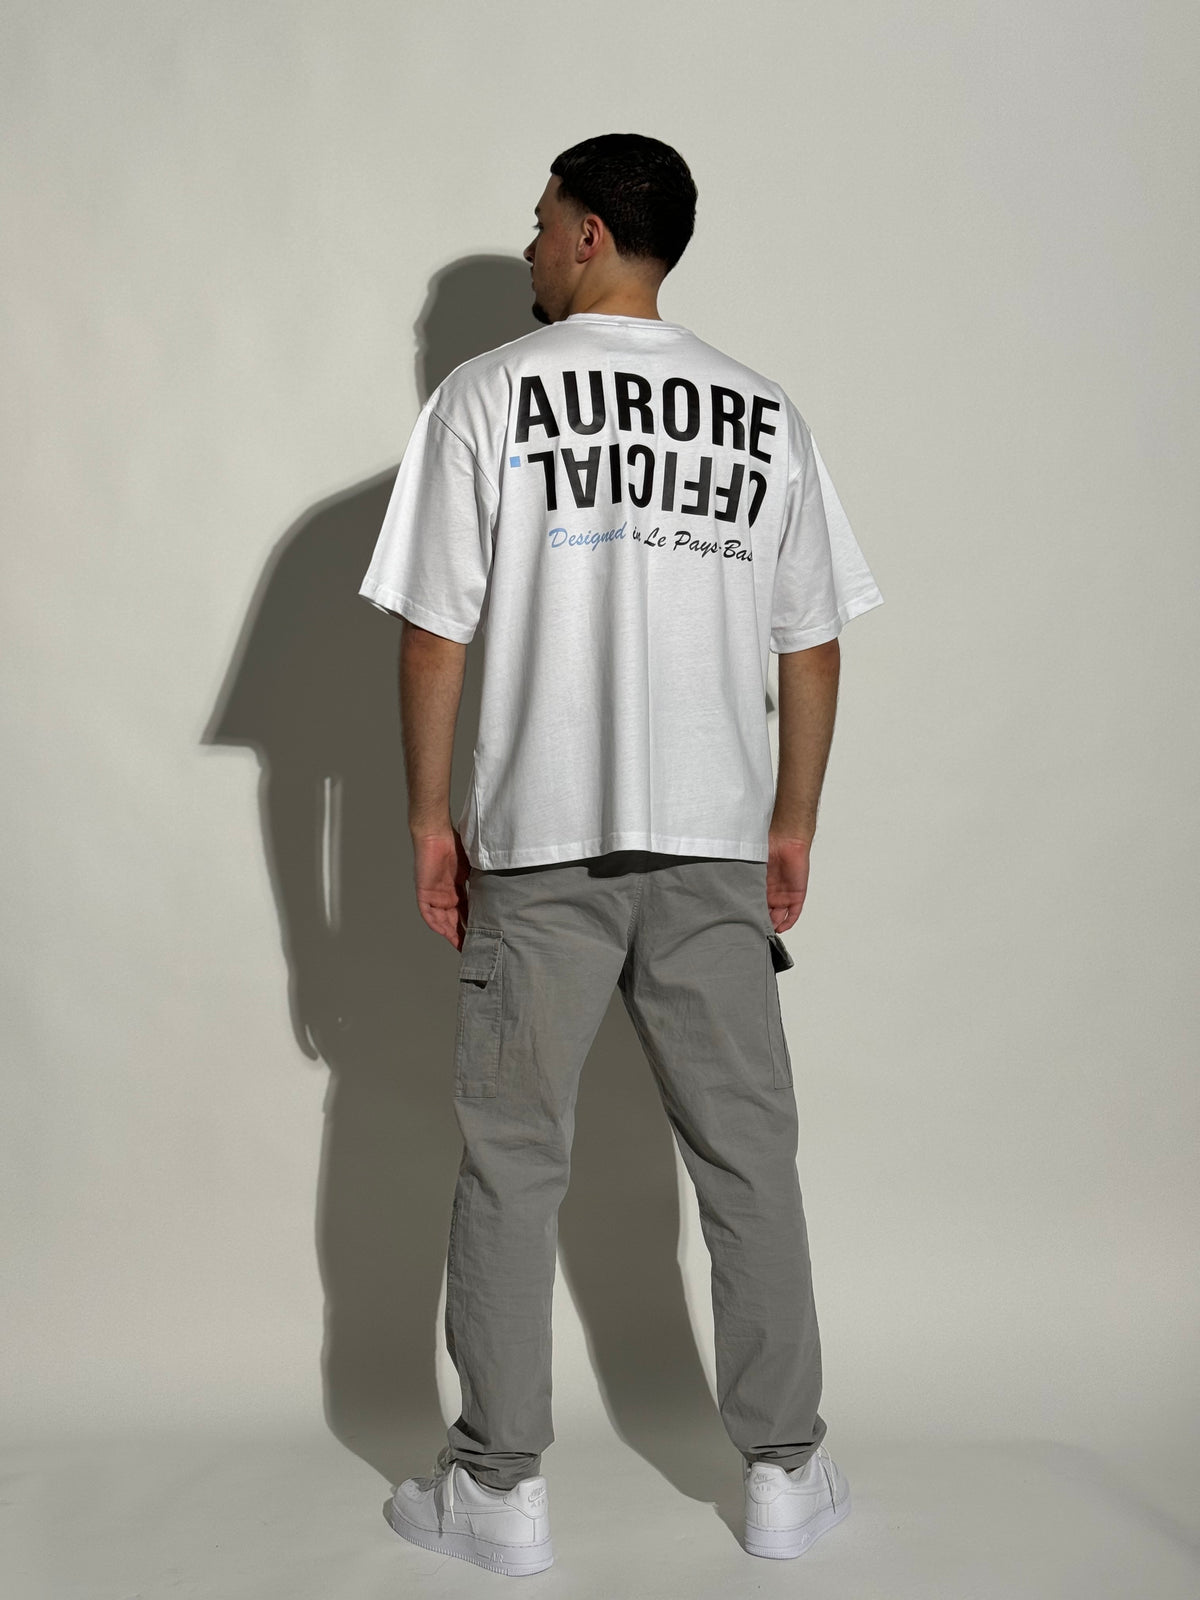 Aurore Official Paris T-shirt White